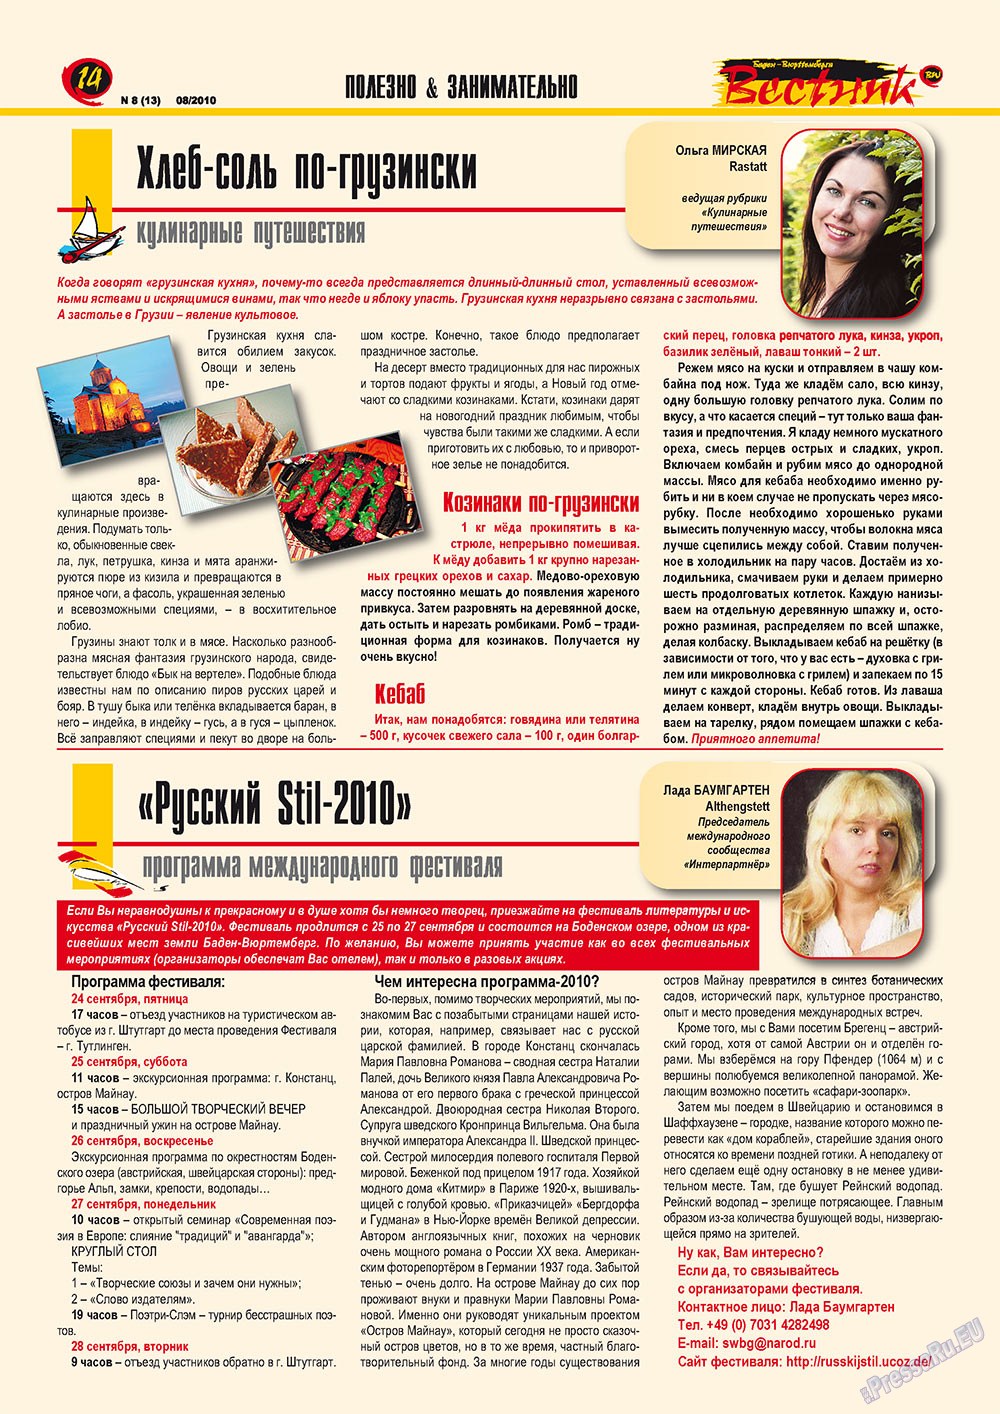 Вестник-info (журнал). 2010 год, номер 8, стр. 14